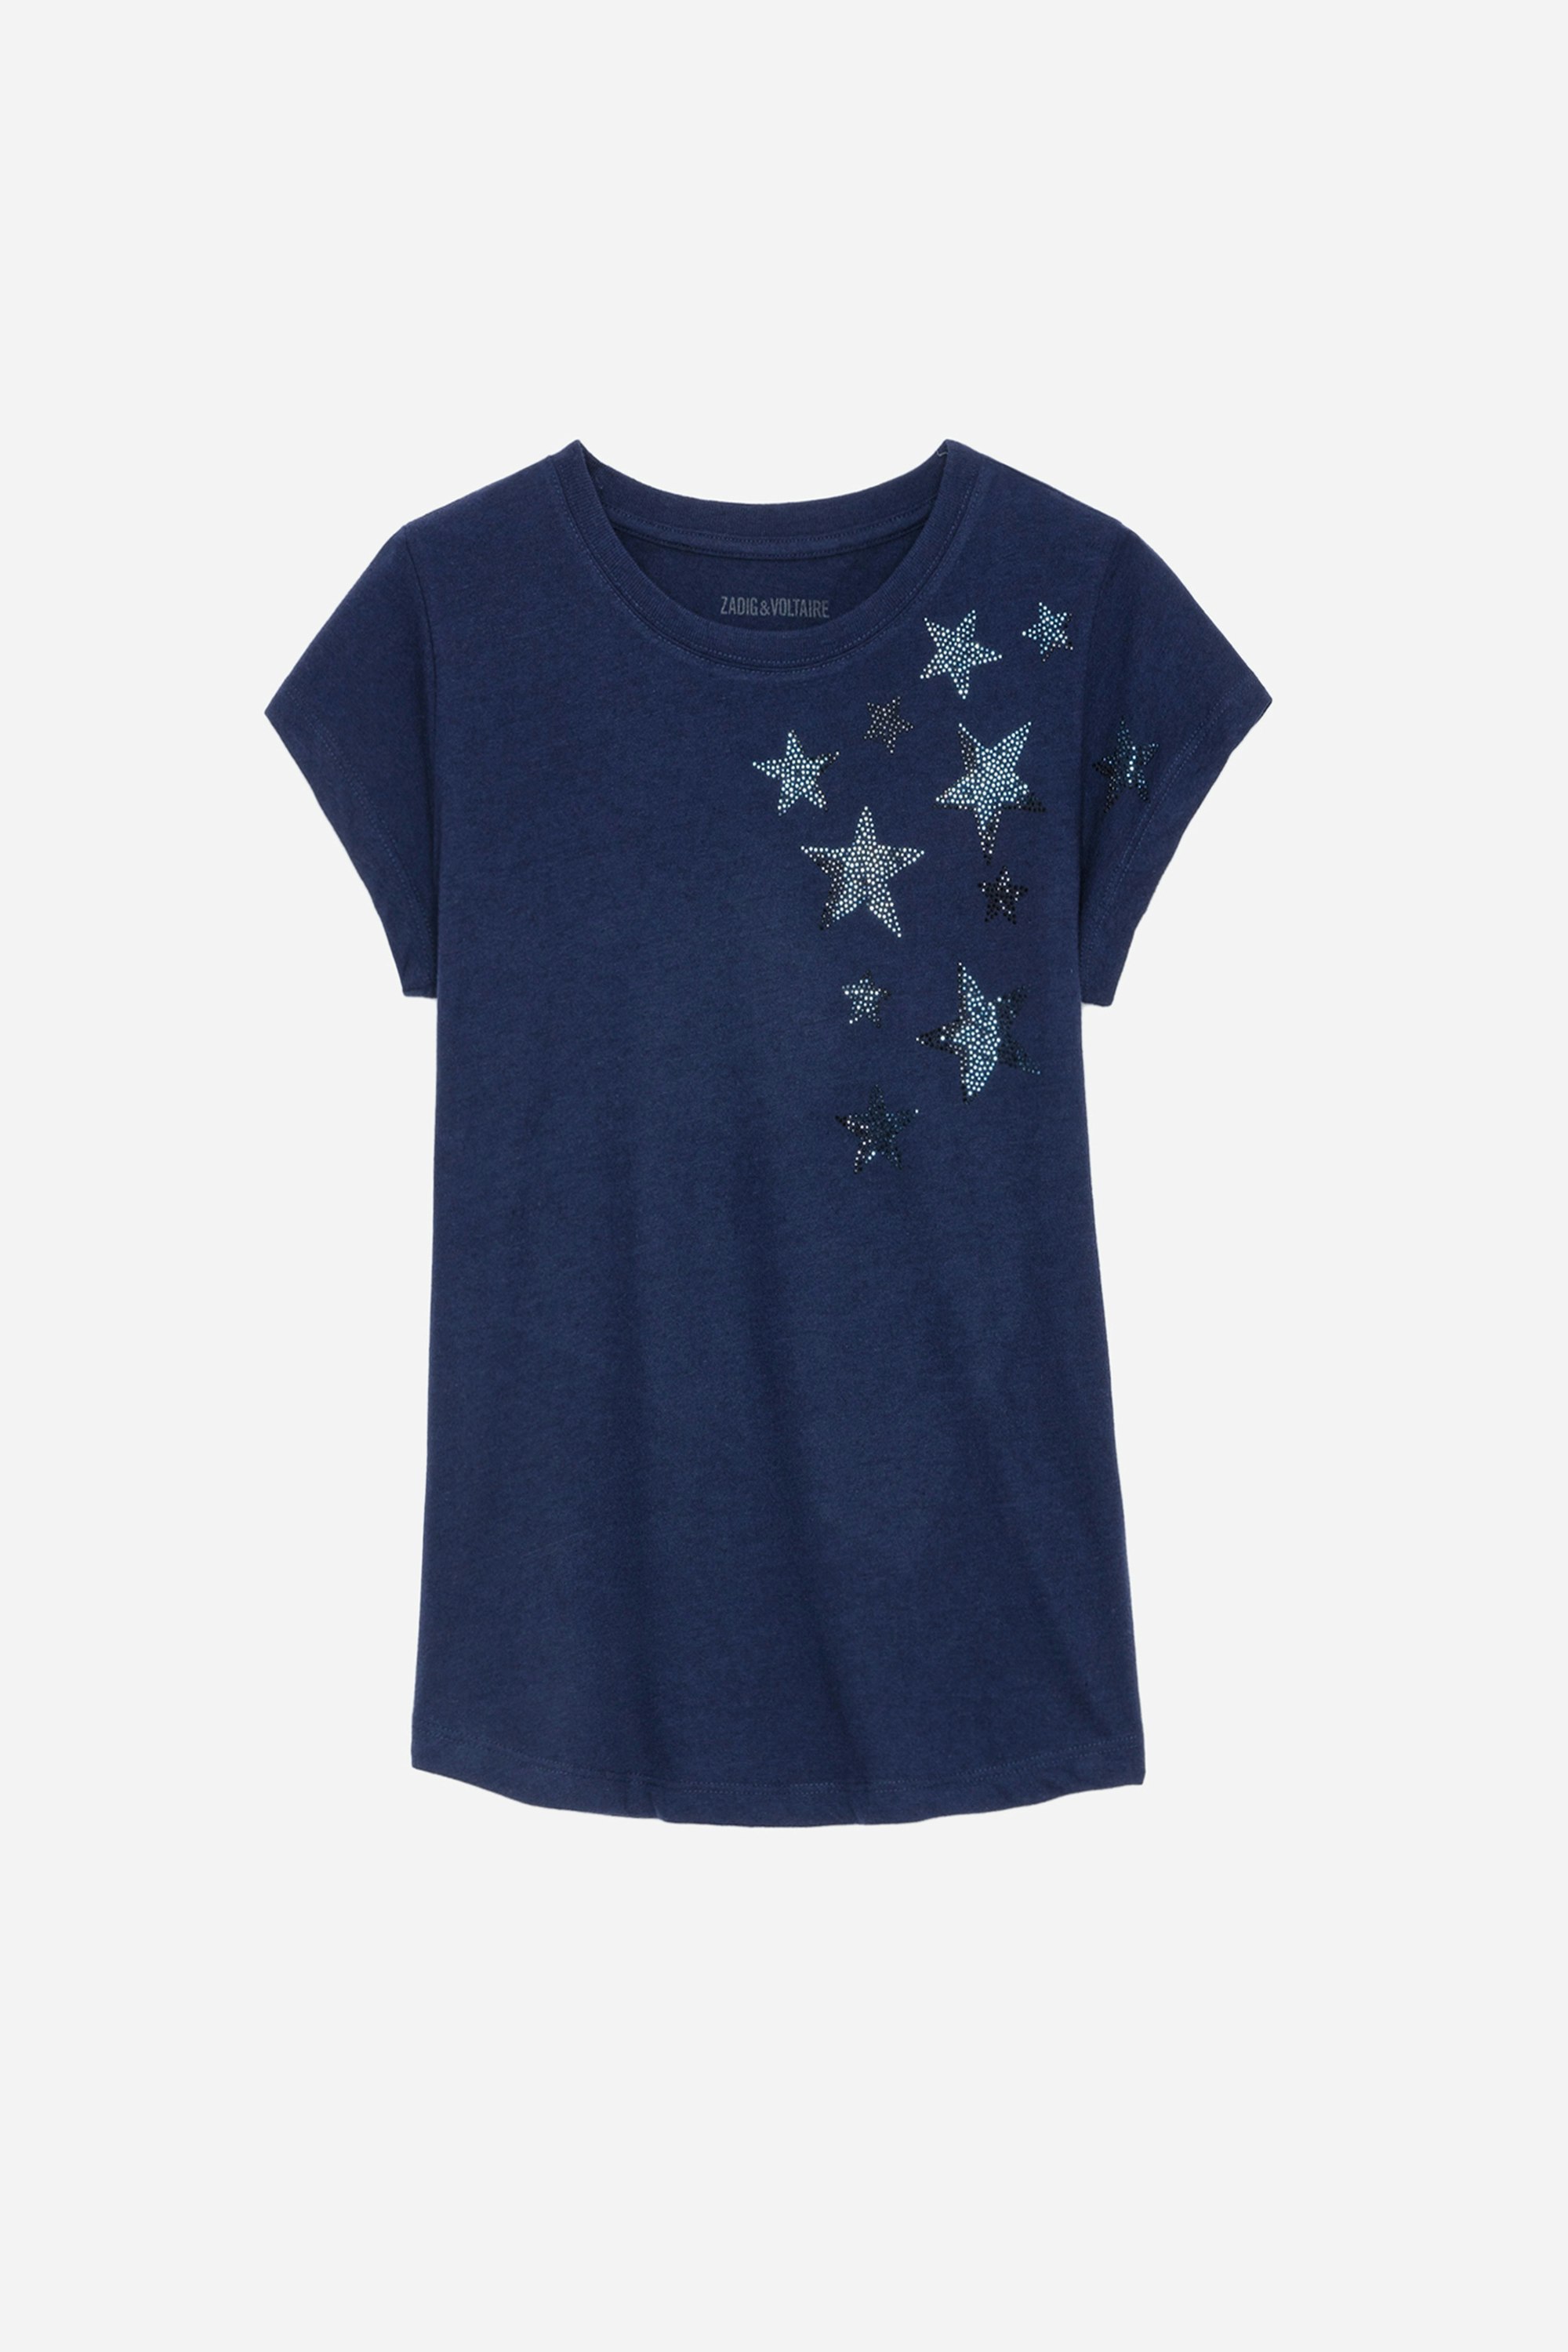 T-shirt Skinny Stars Strass - T-shirt blu navy decorata con stelle in strass da donna.